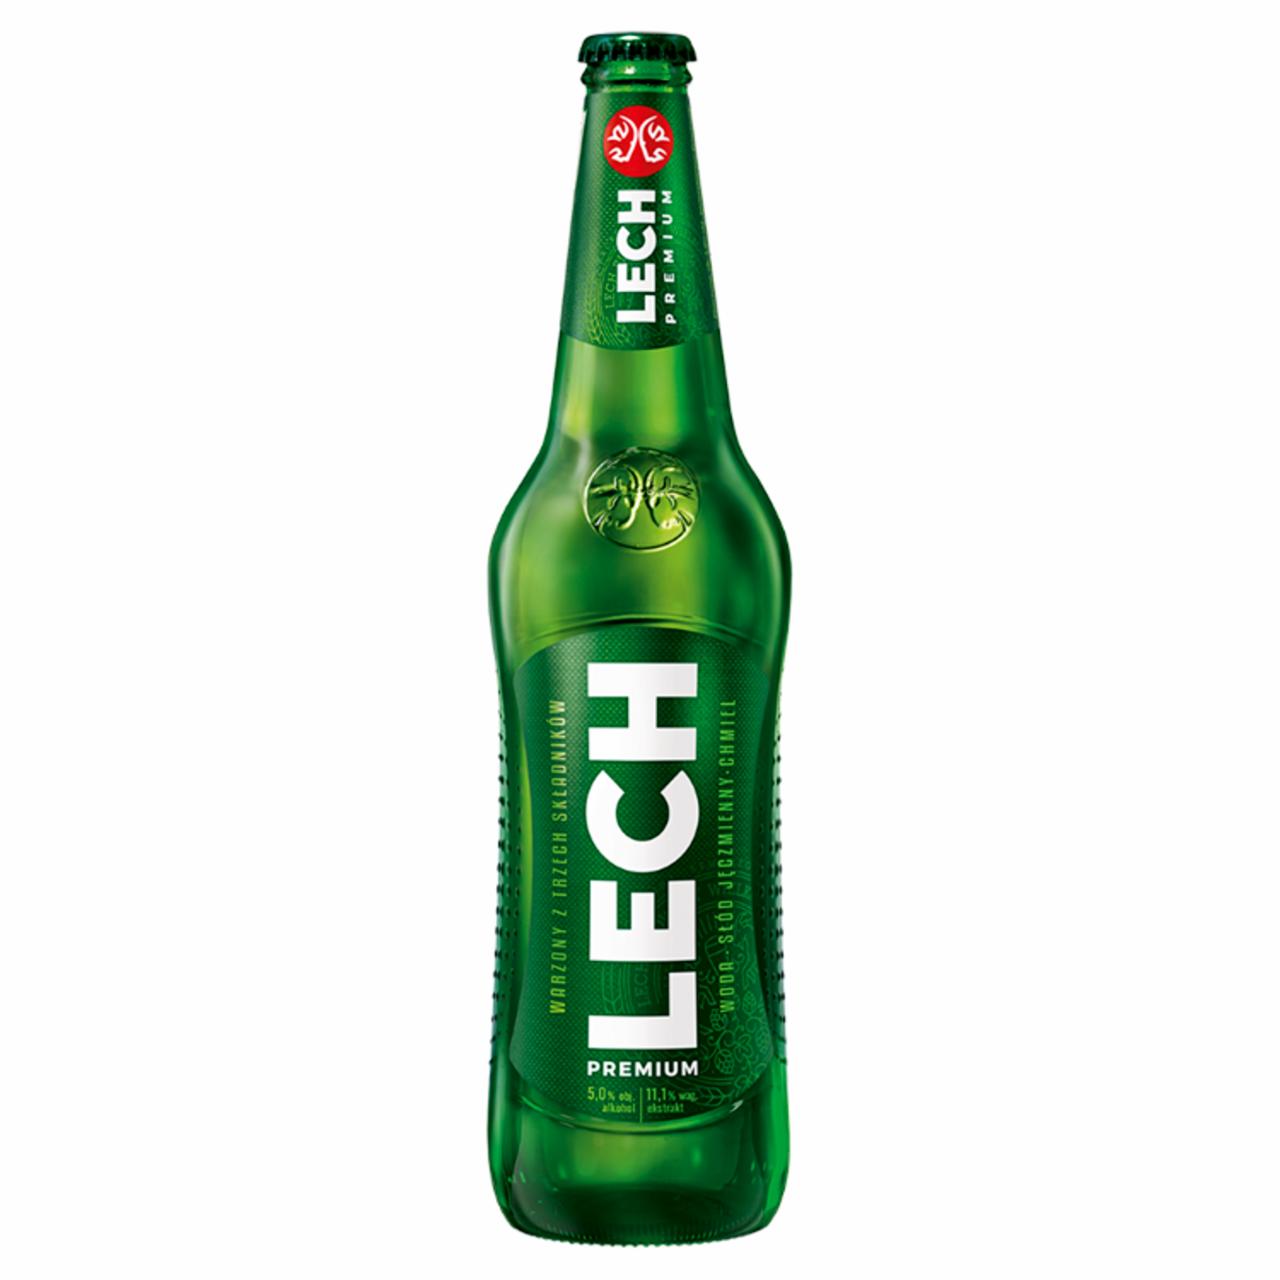 Zdjęcia - Lech Premium Piwo jasne 650 ml